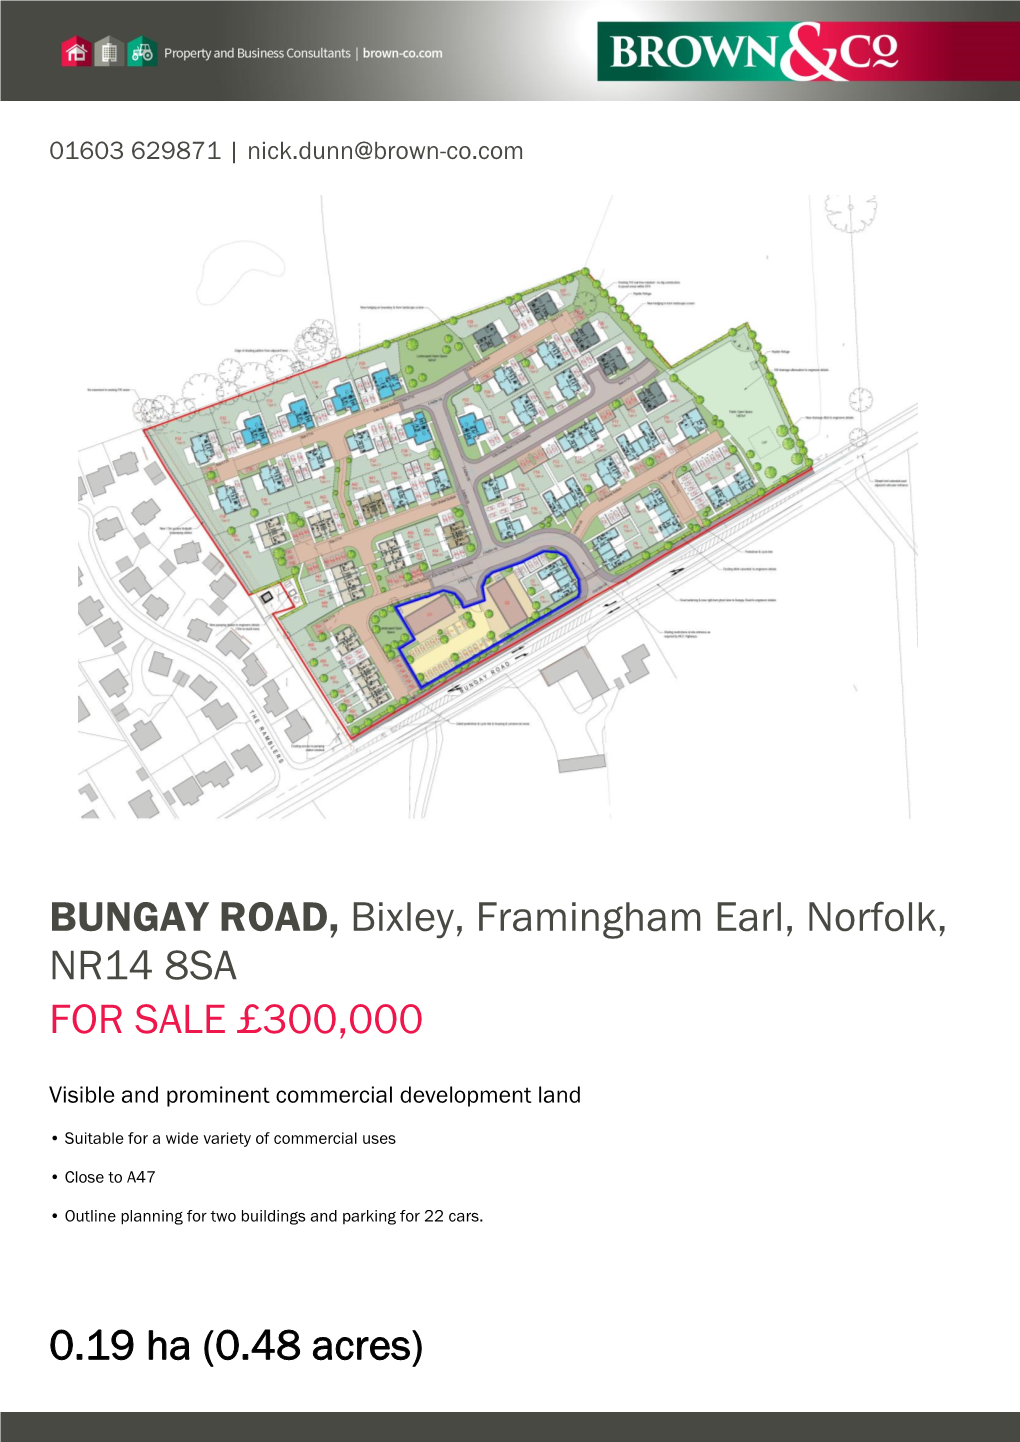 BUNGAY ROAD, Bixley, Framingham Earl, Norfolk, NR14 8SA for SALE £300,000 0.19 Ha (0.48 Acres)